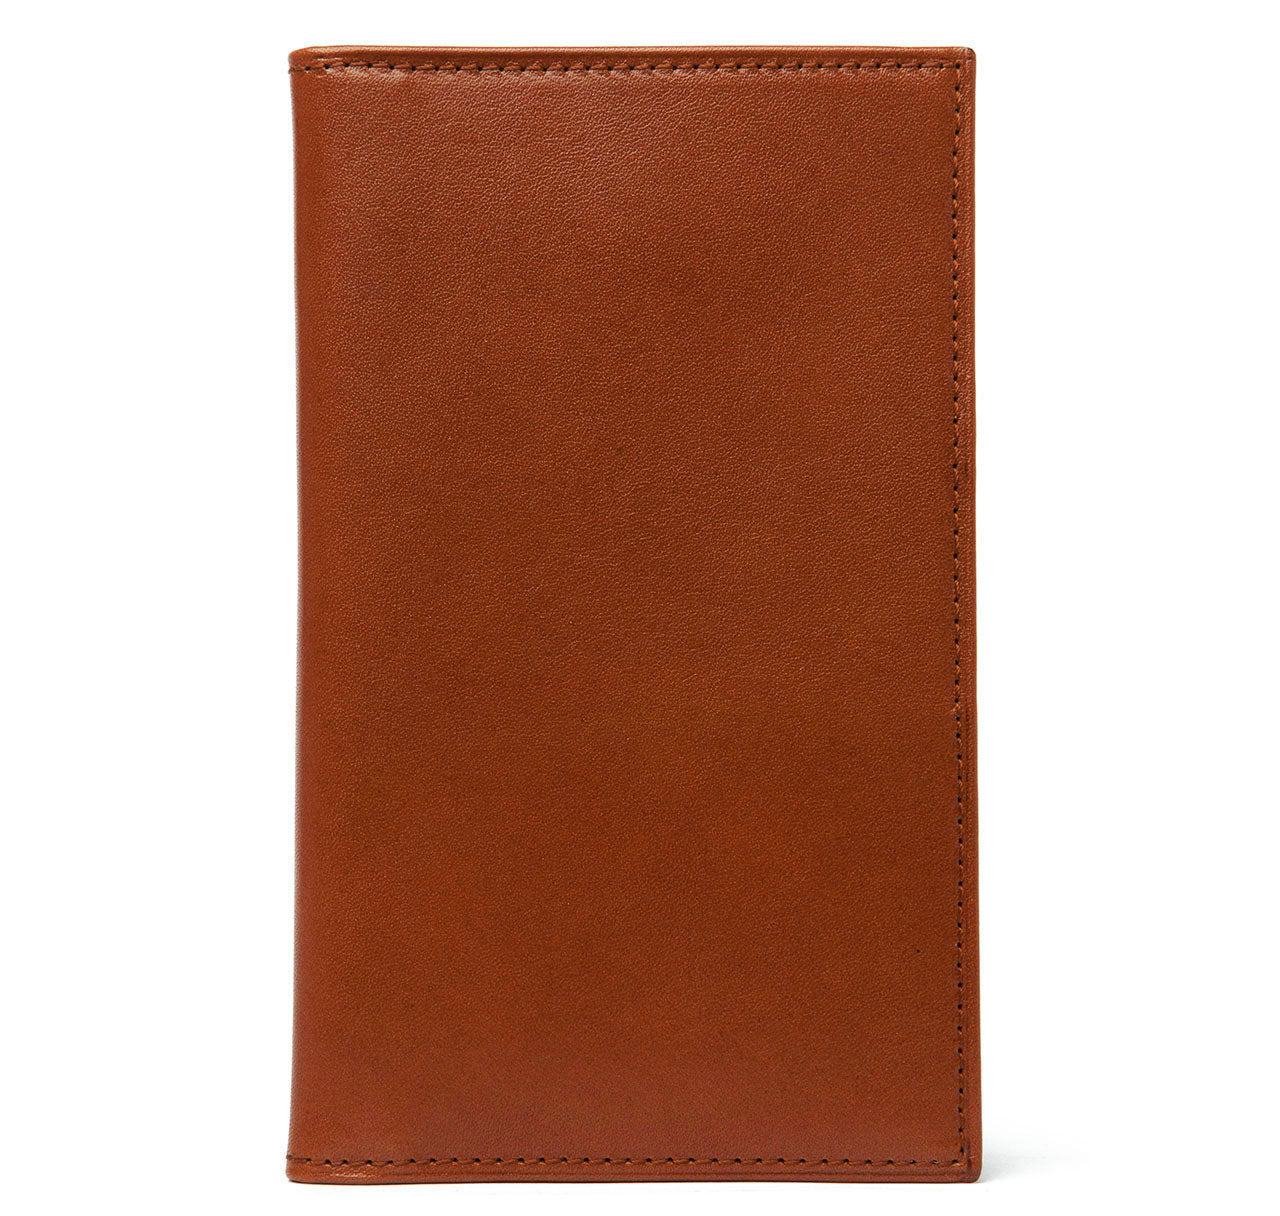 Cognac Leather Travel Wallet